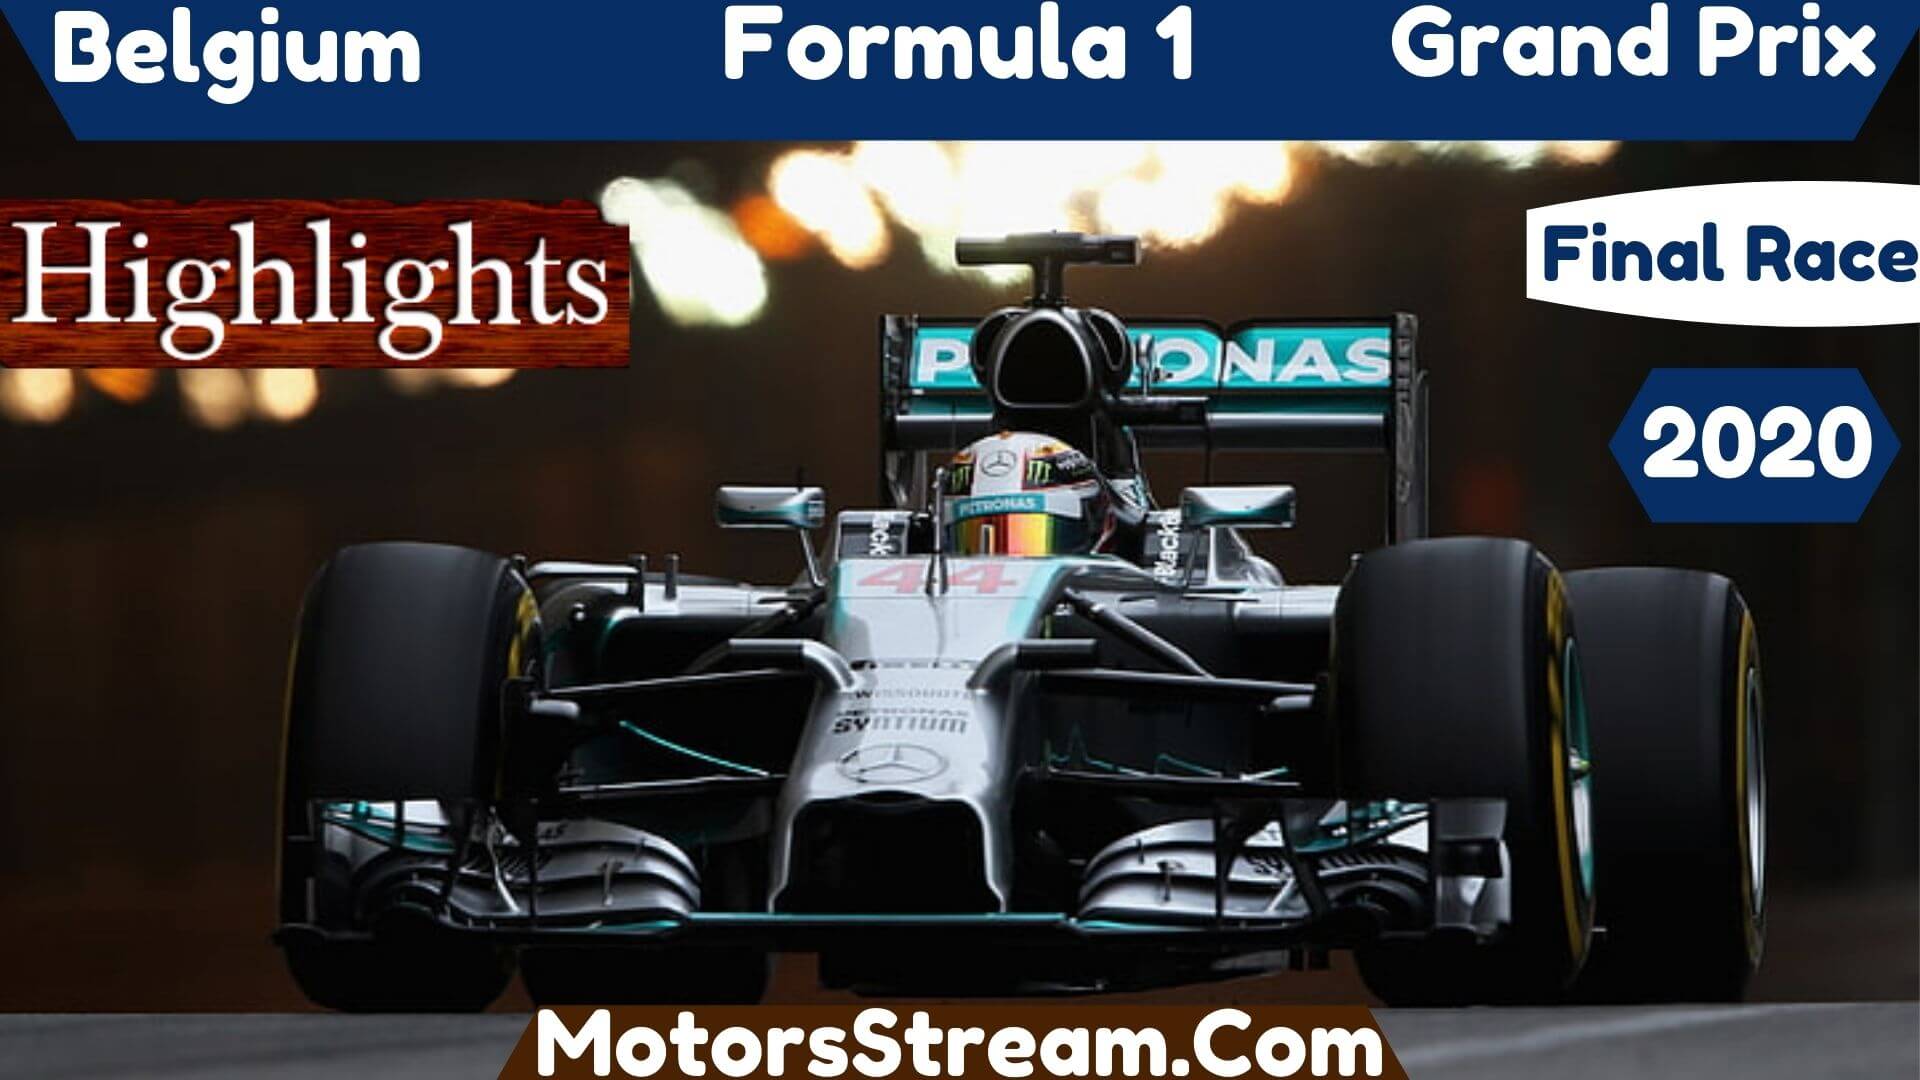 Belgium Grand Prix Final Race Highlights 2020 Formula 1